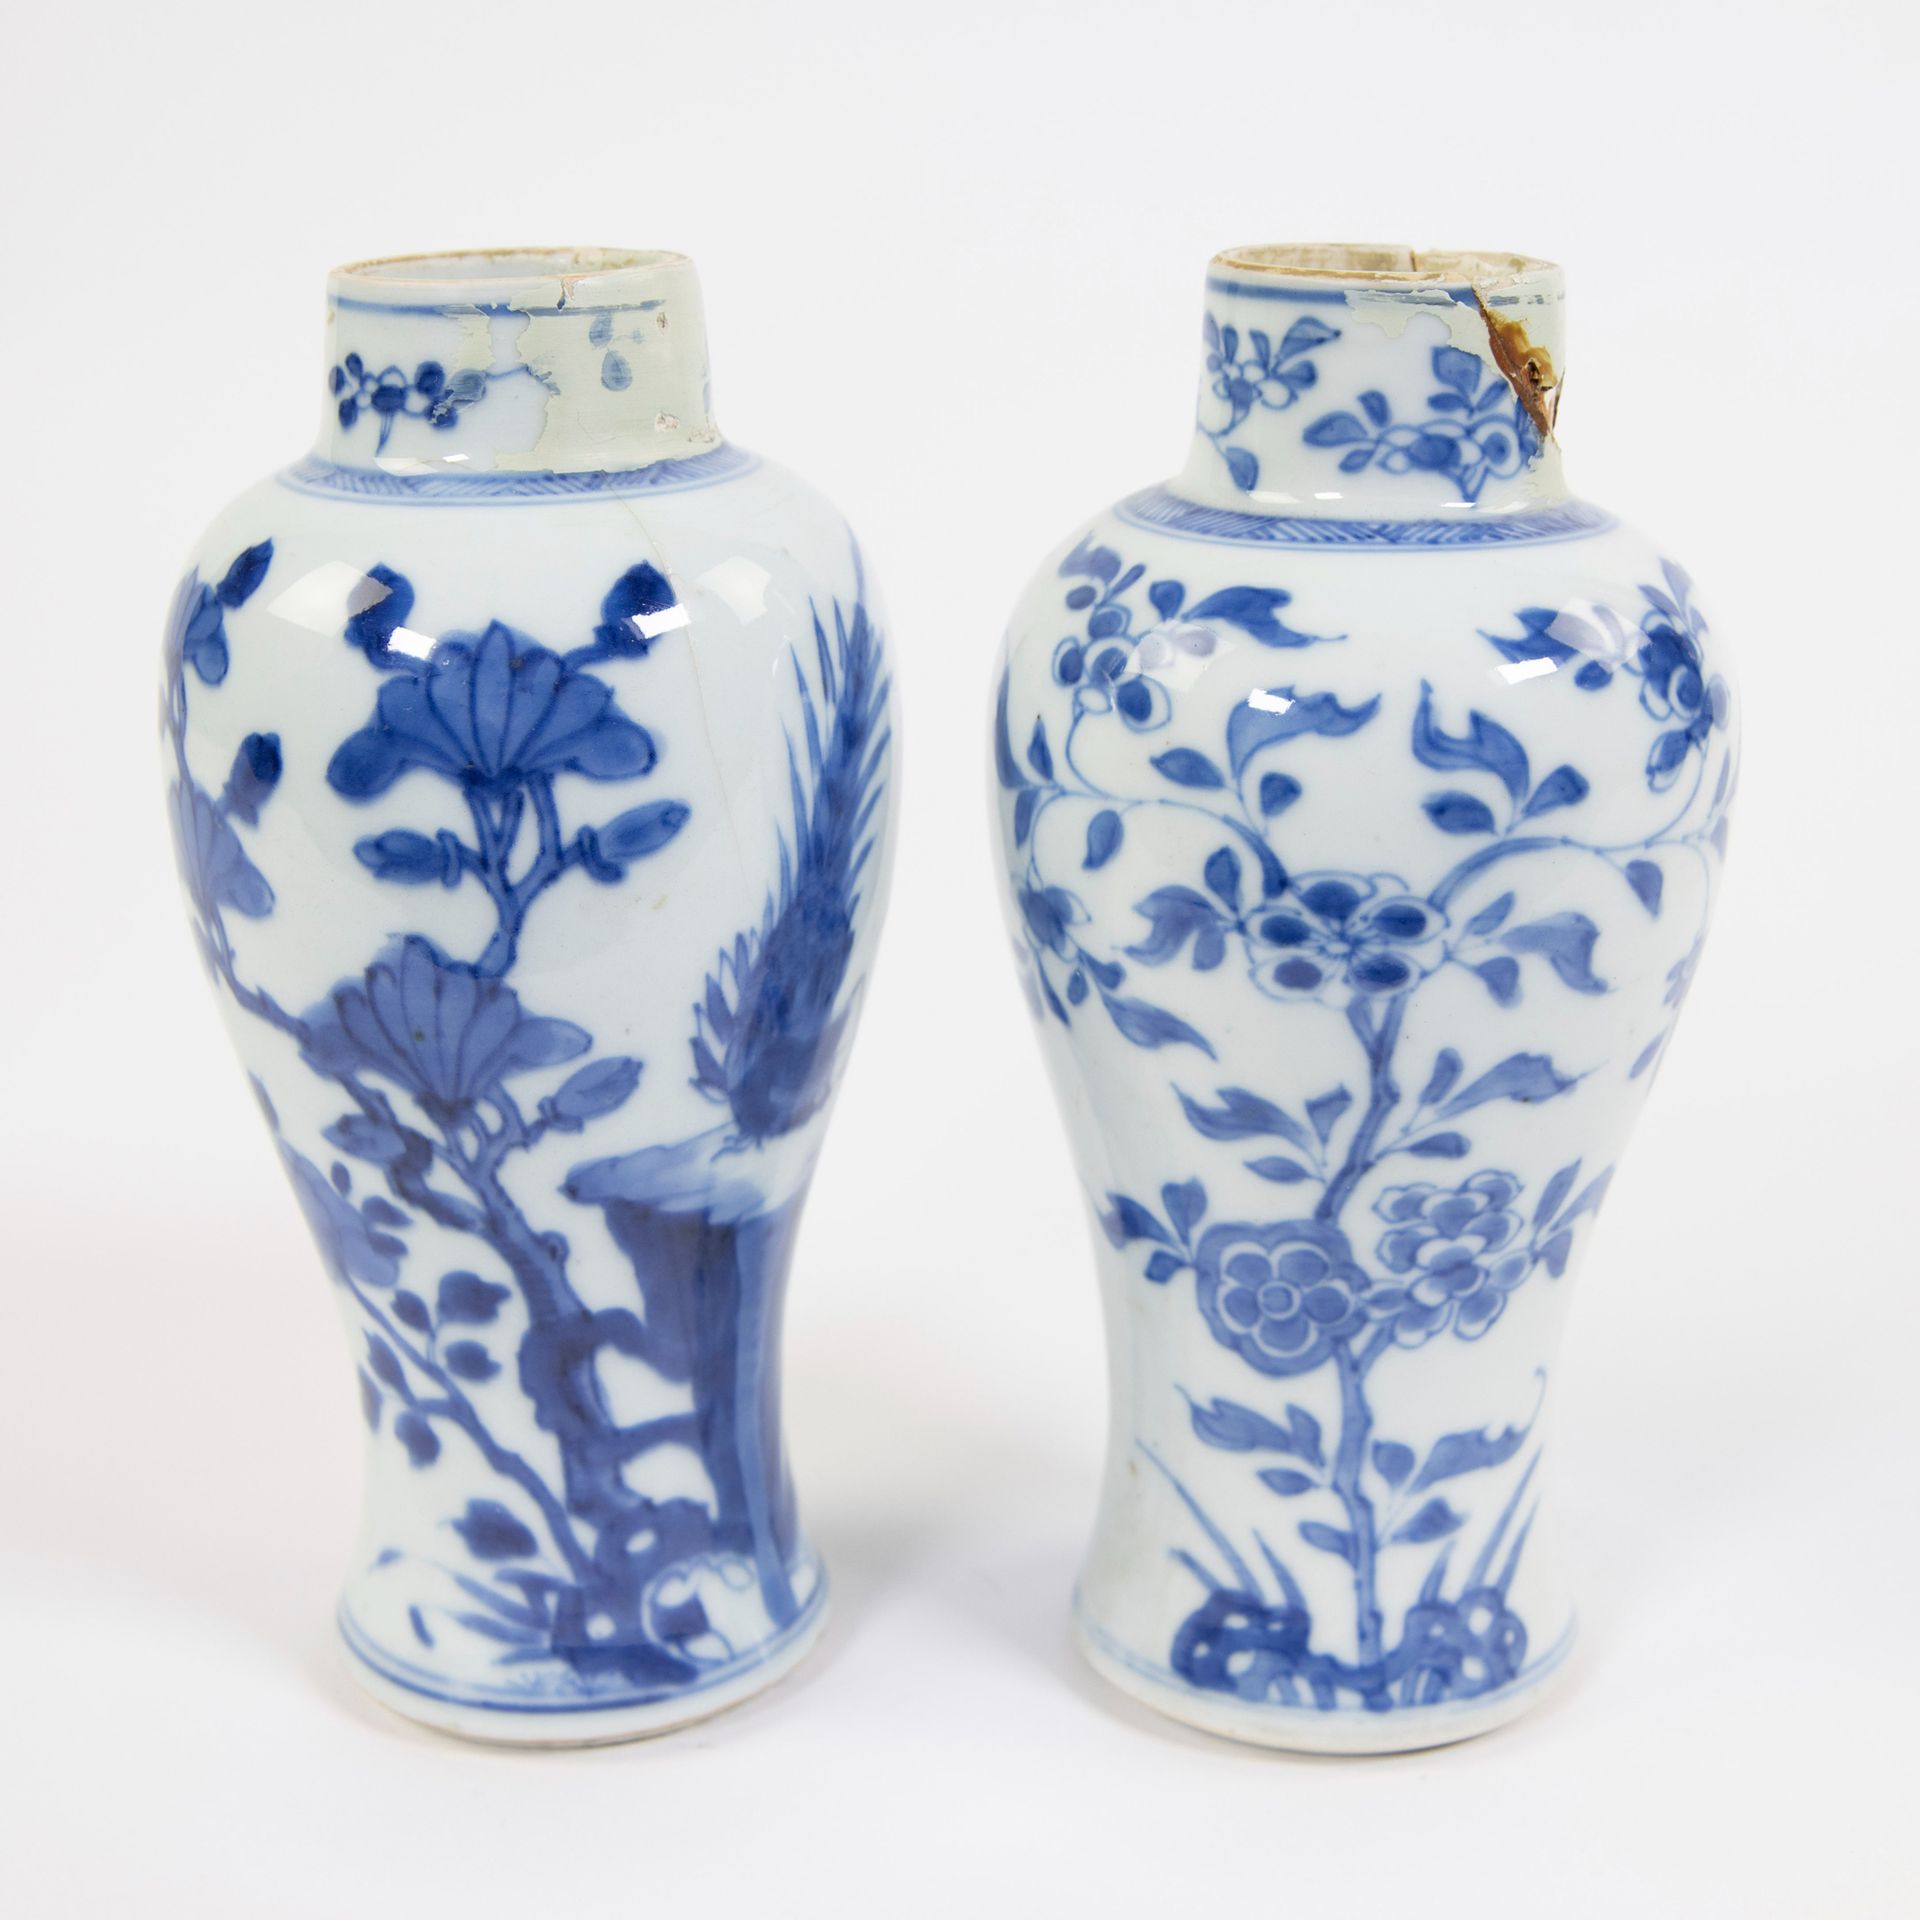 Null Due vasi in porcellana Kangxi, Cina, inizio XVIII secolo
Entrambi con resta&hellip;